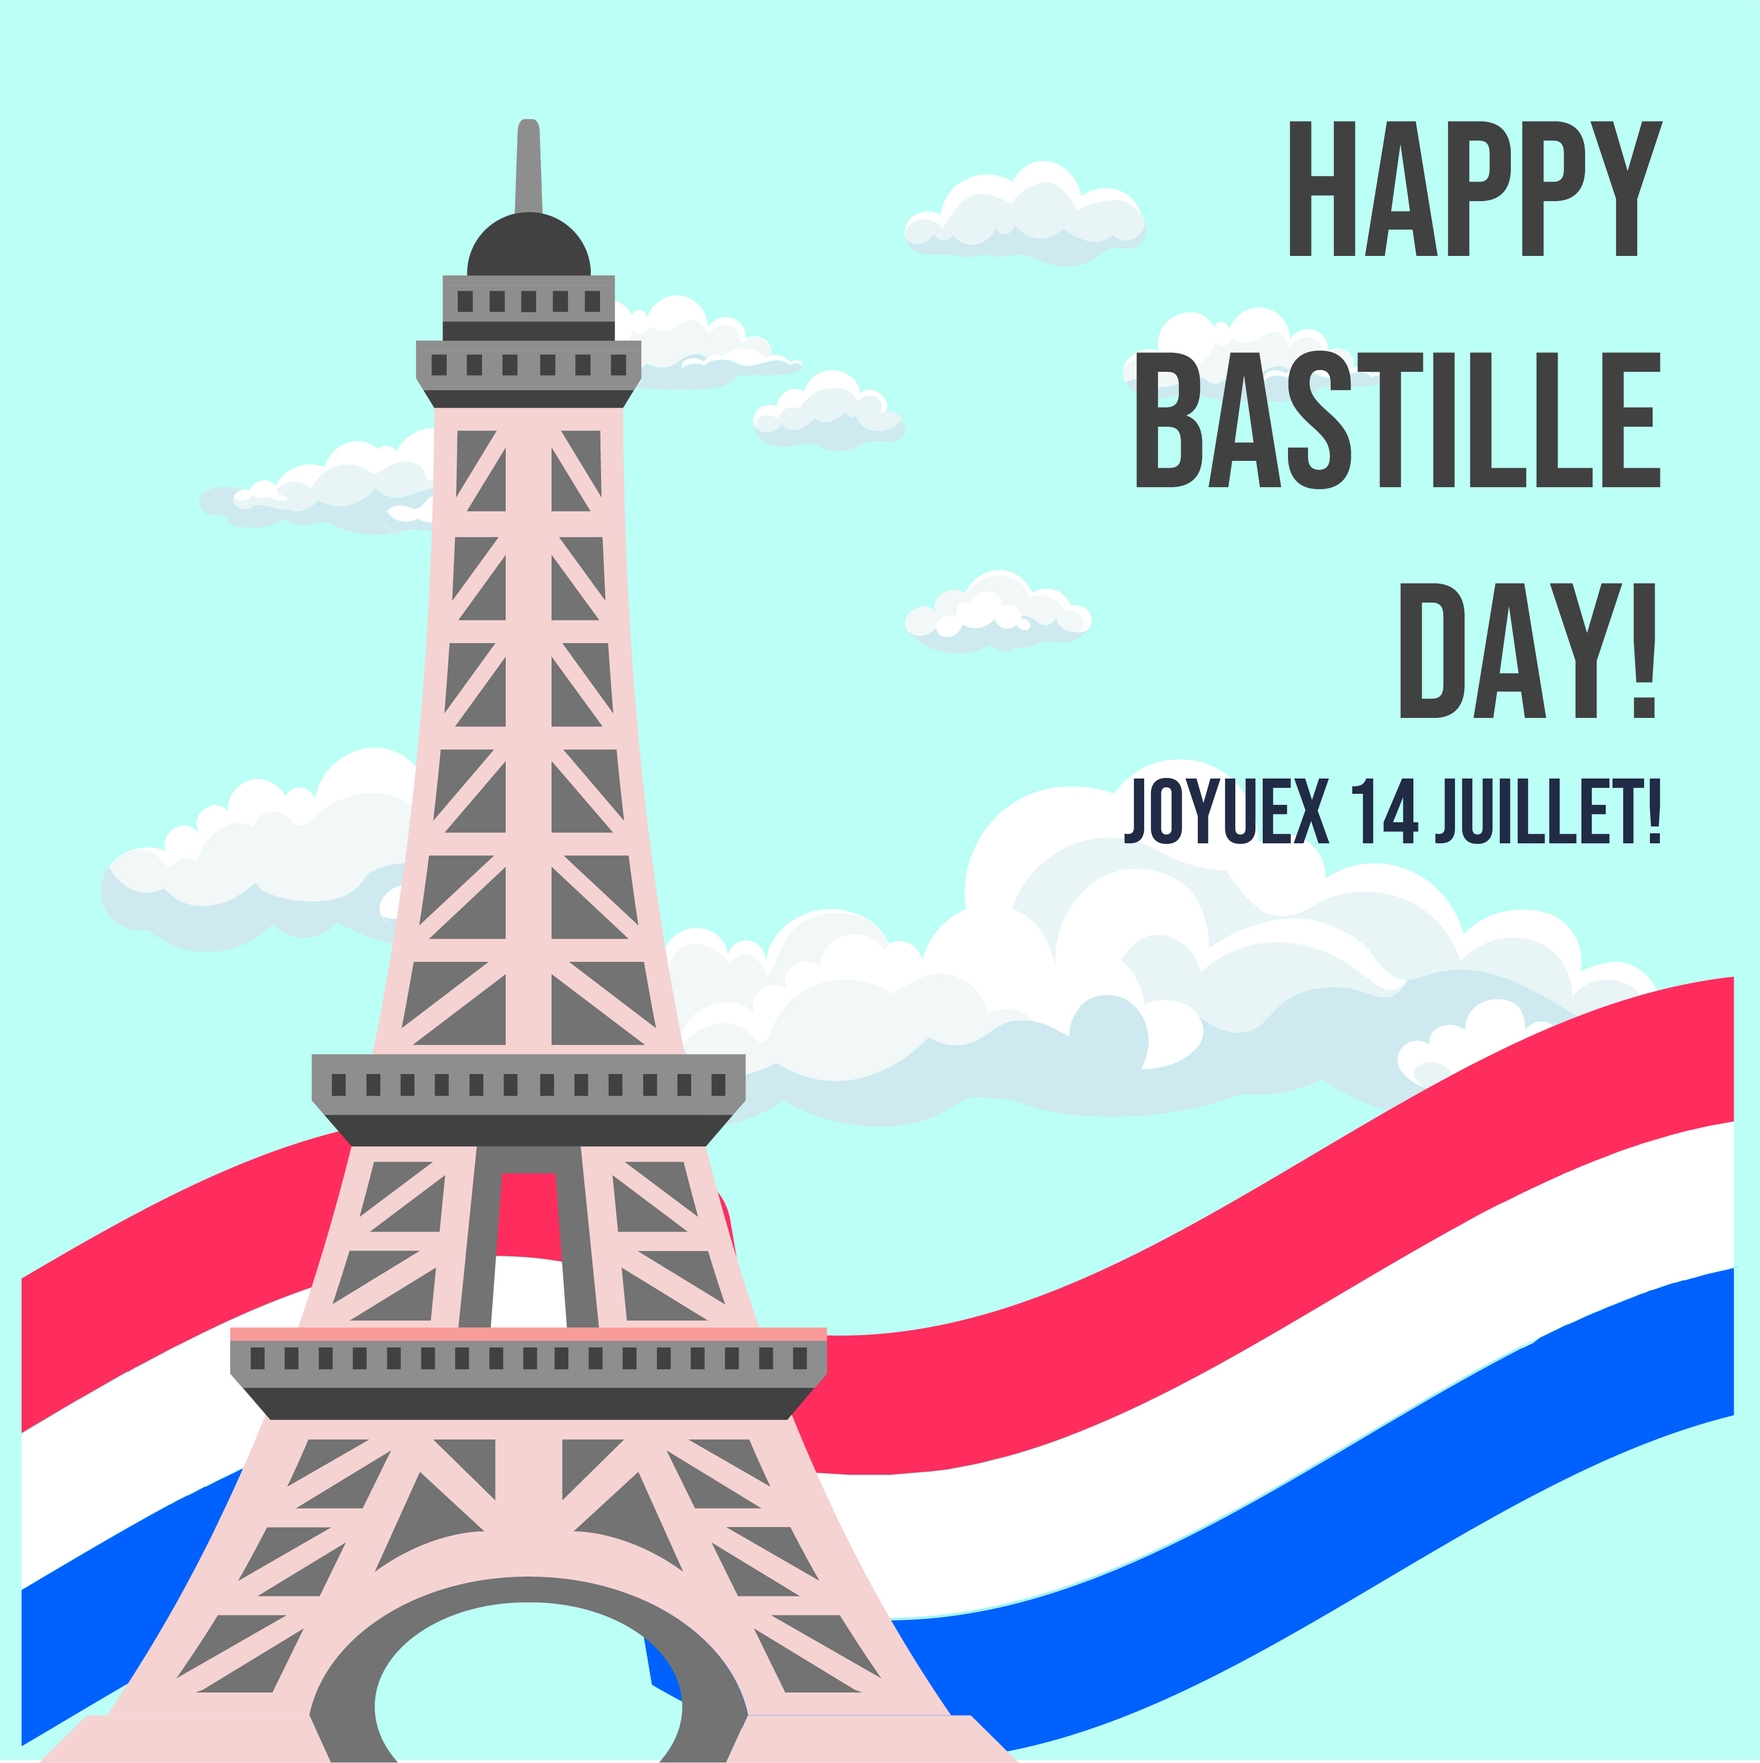 Free Bastille Day Wishes Vector in Illustrator, PSD, EPS, SVG, JPG, PNG